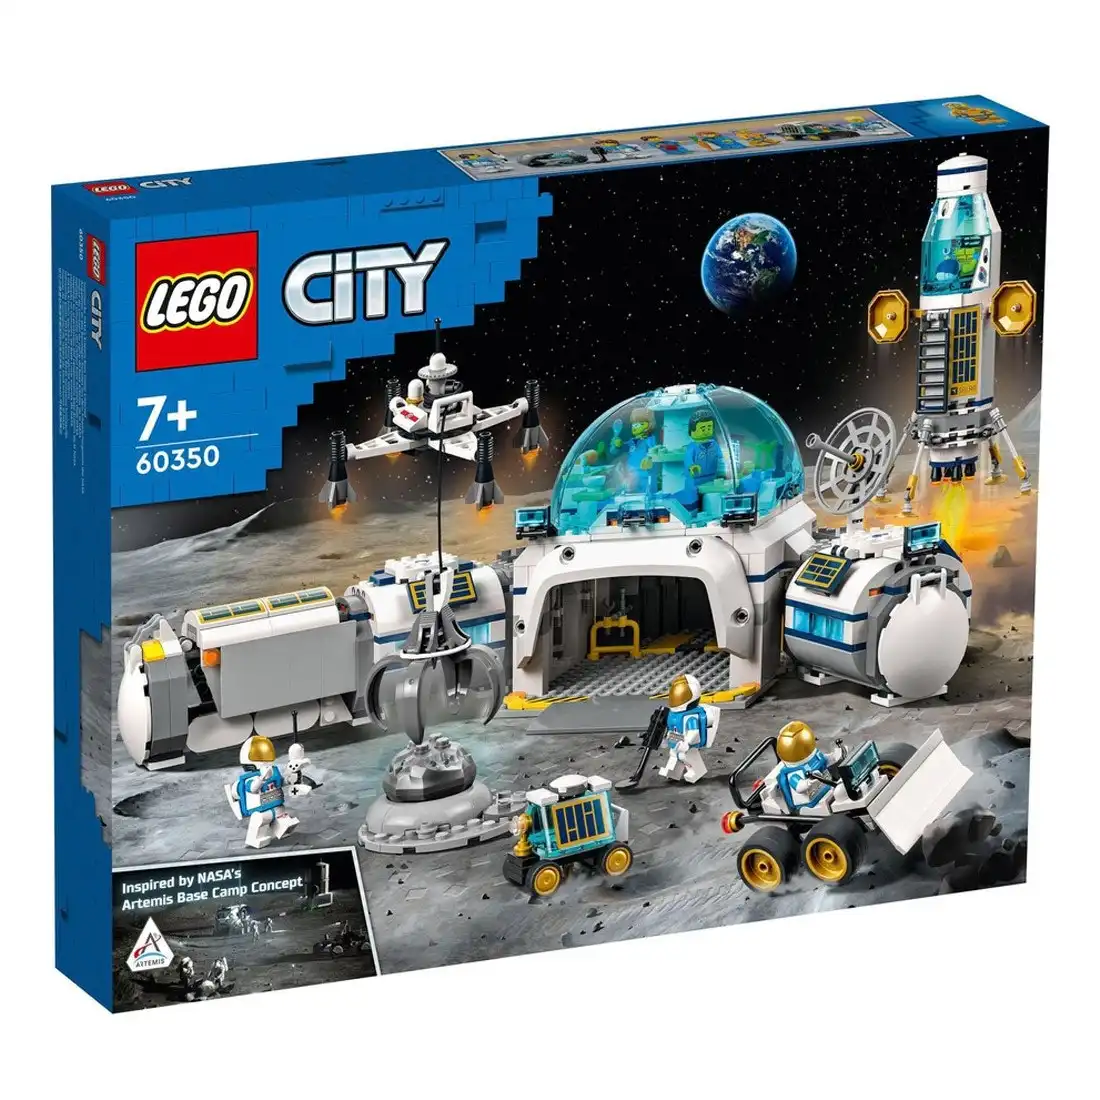 LEGO City Lunar Research Base (60350)